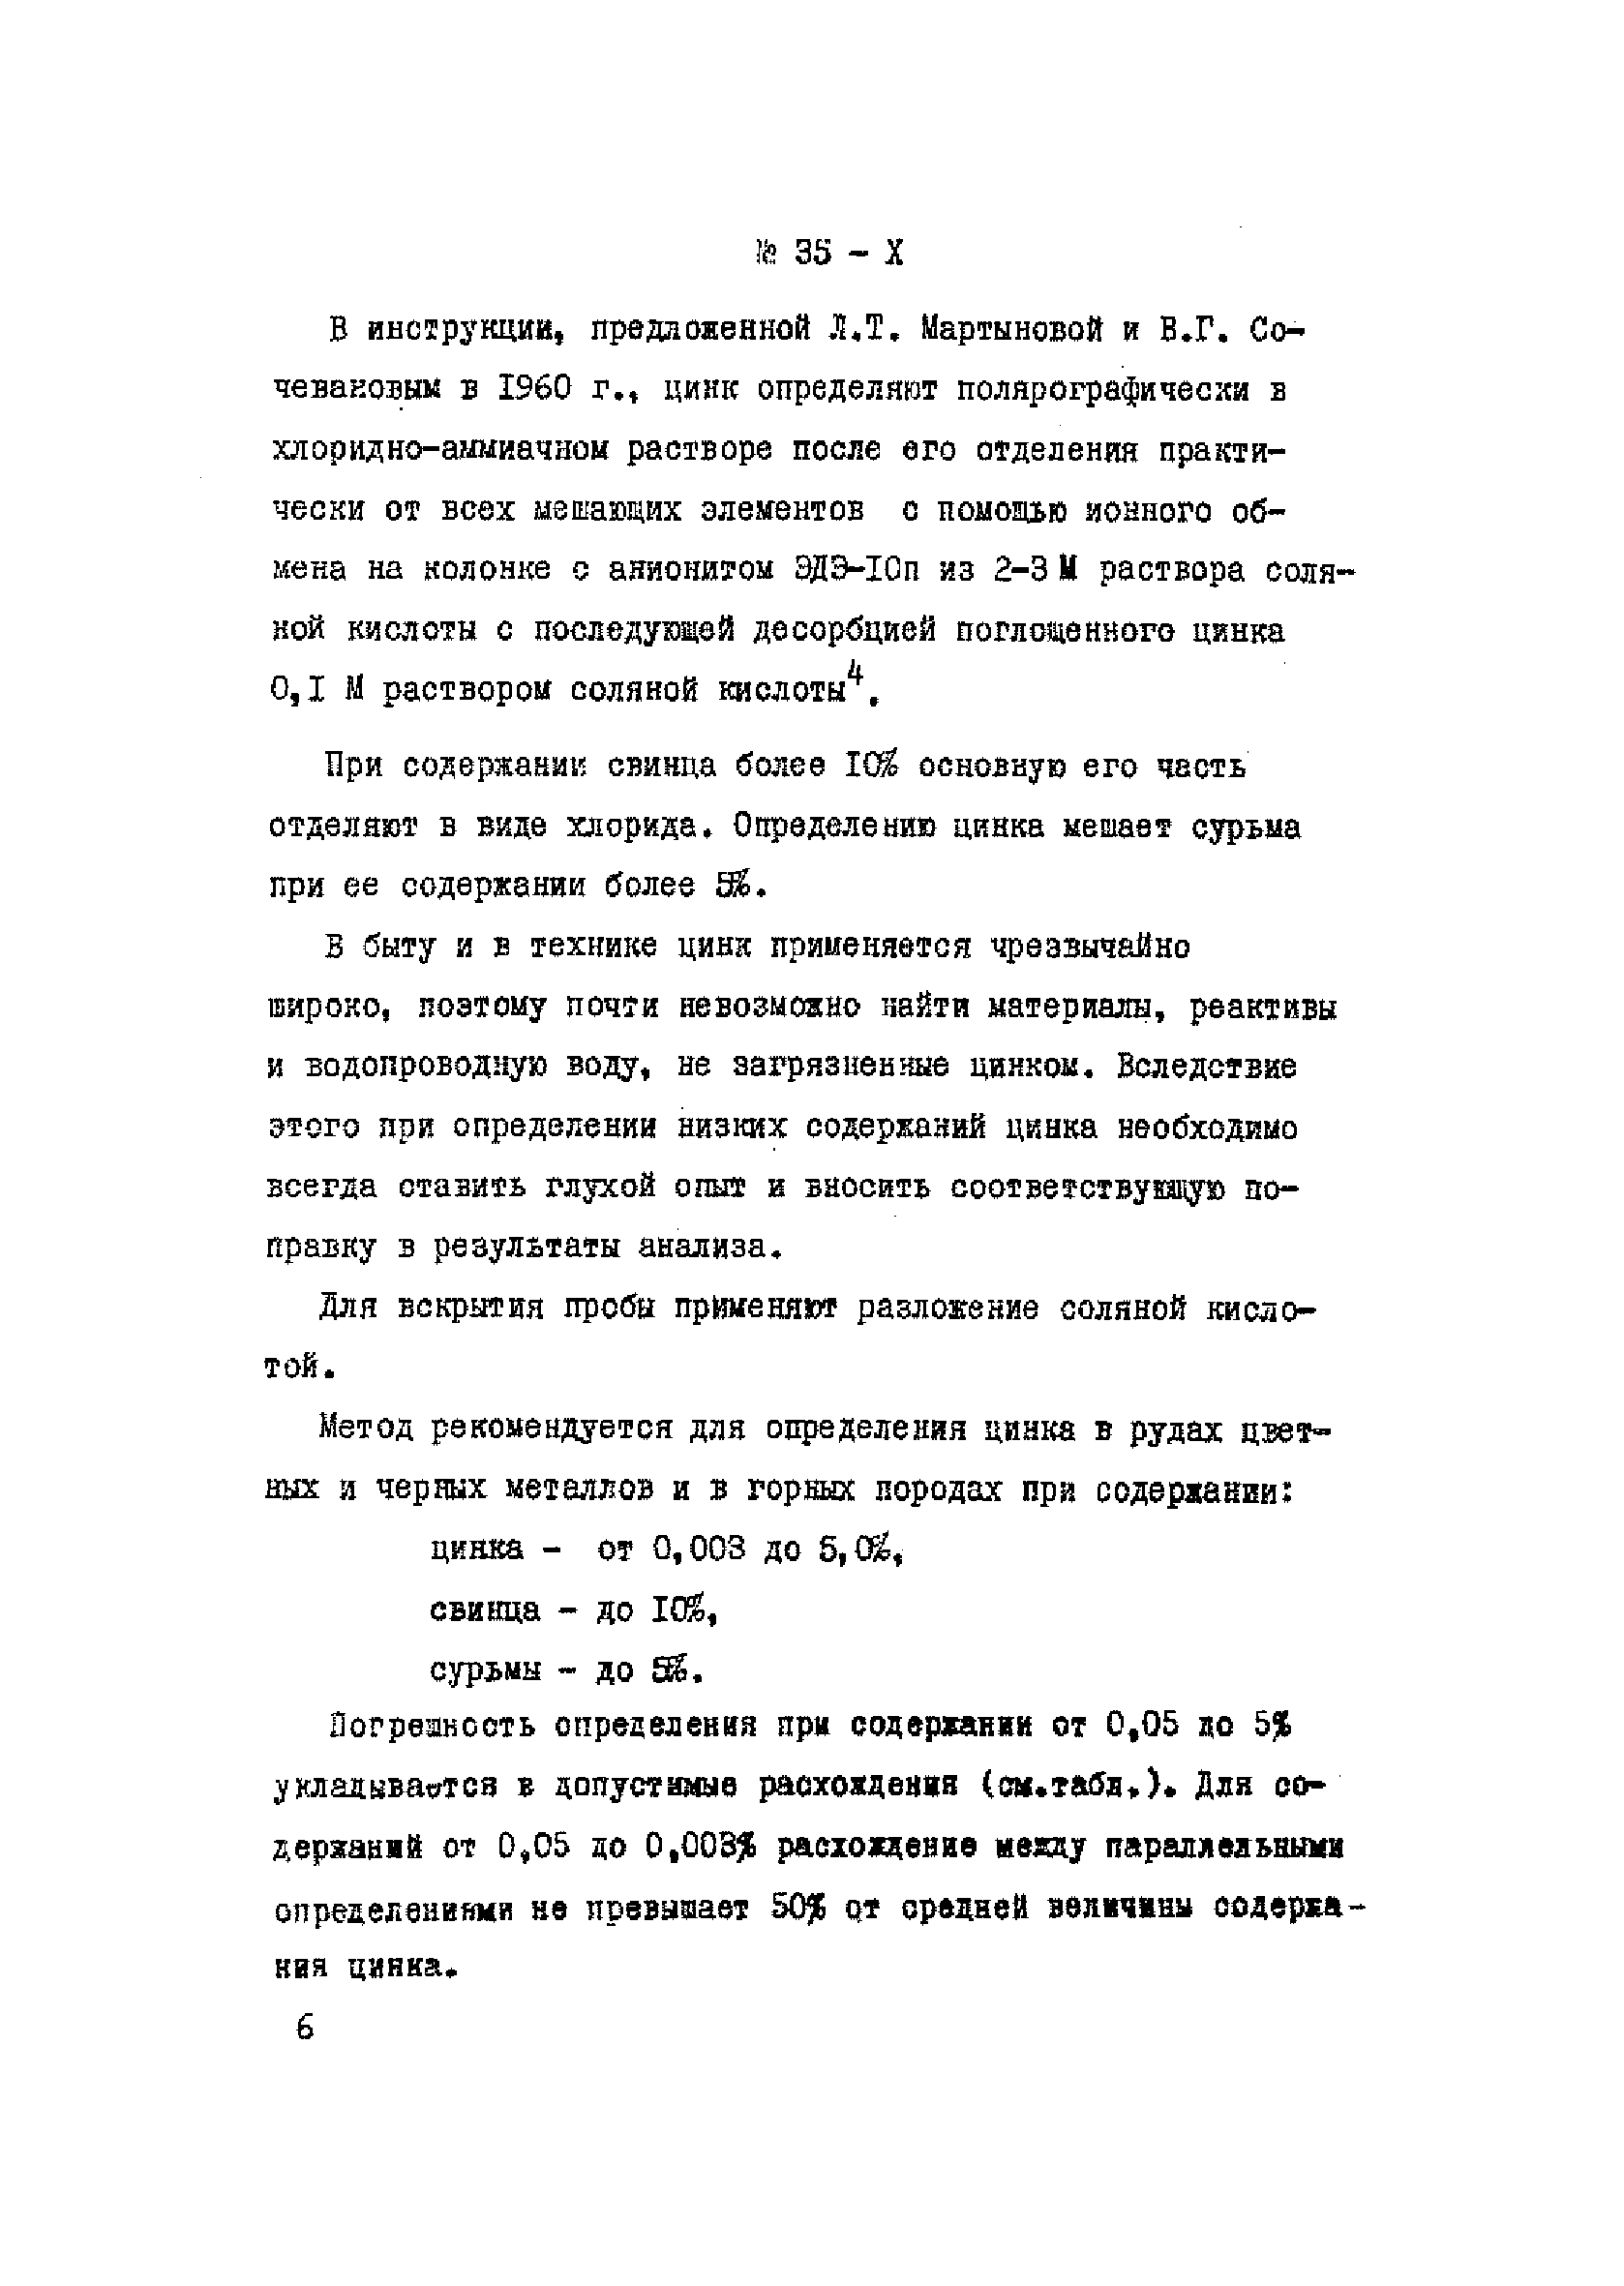 Инструкция НСАМ 35-Х